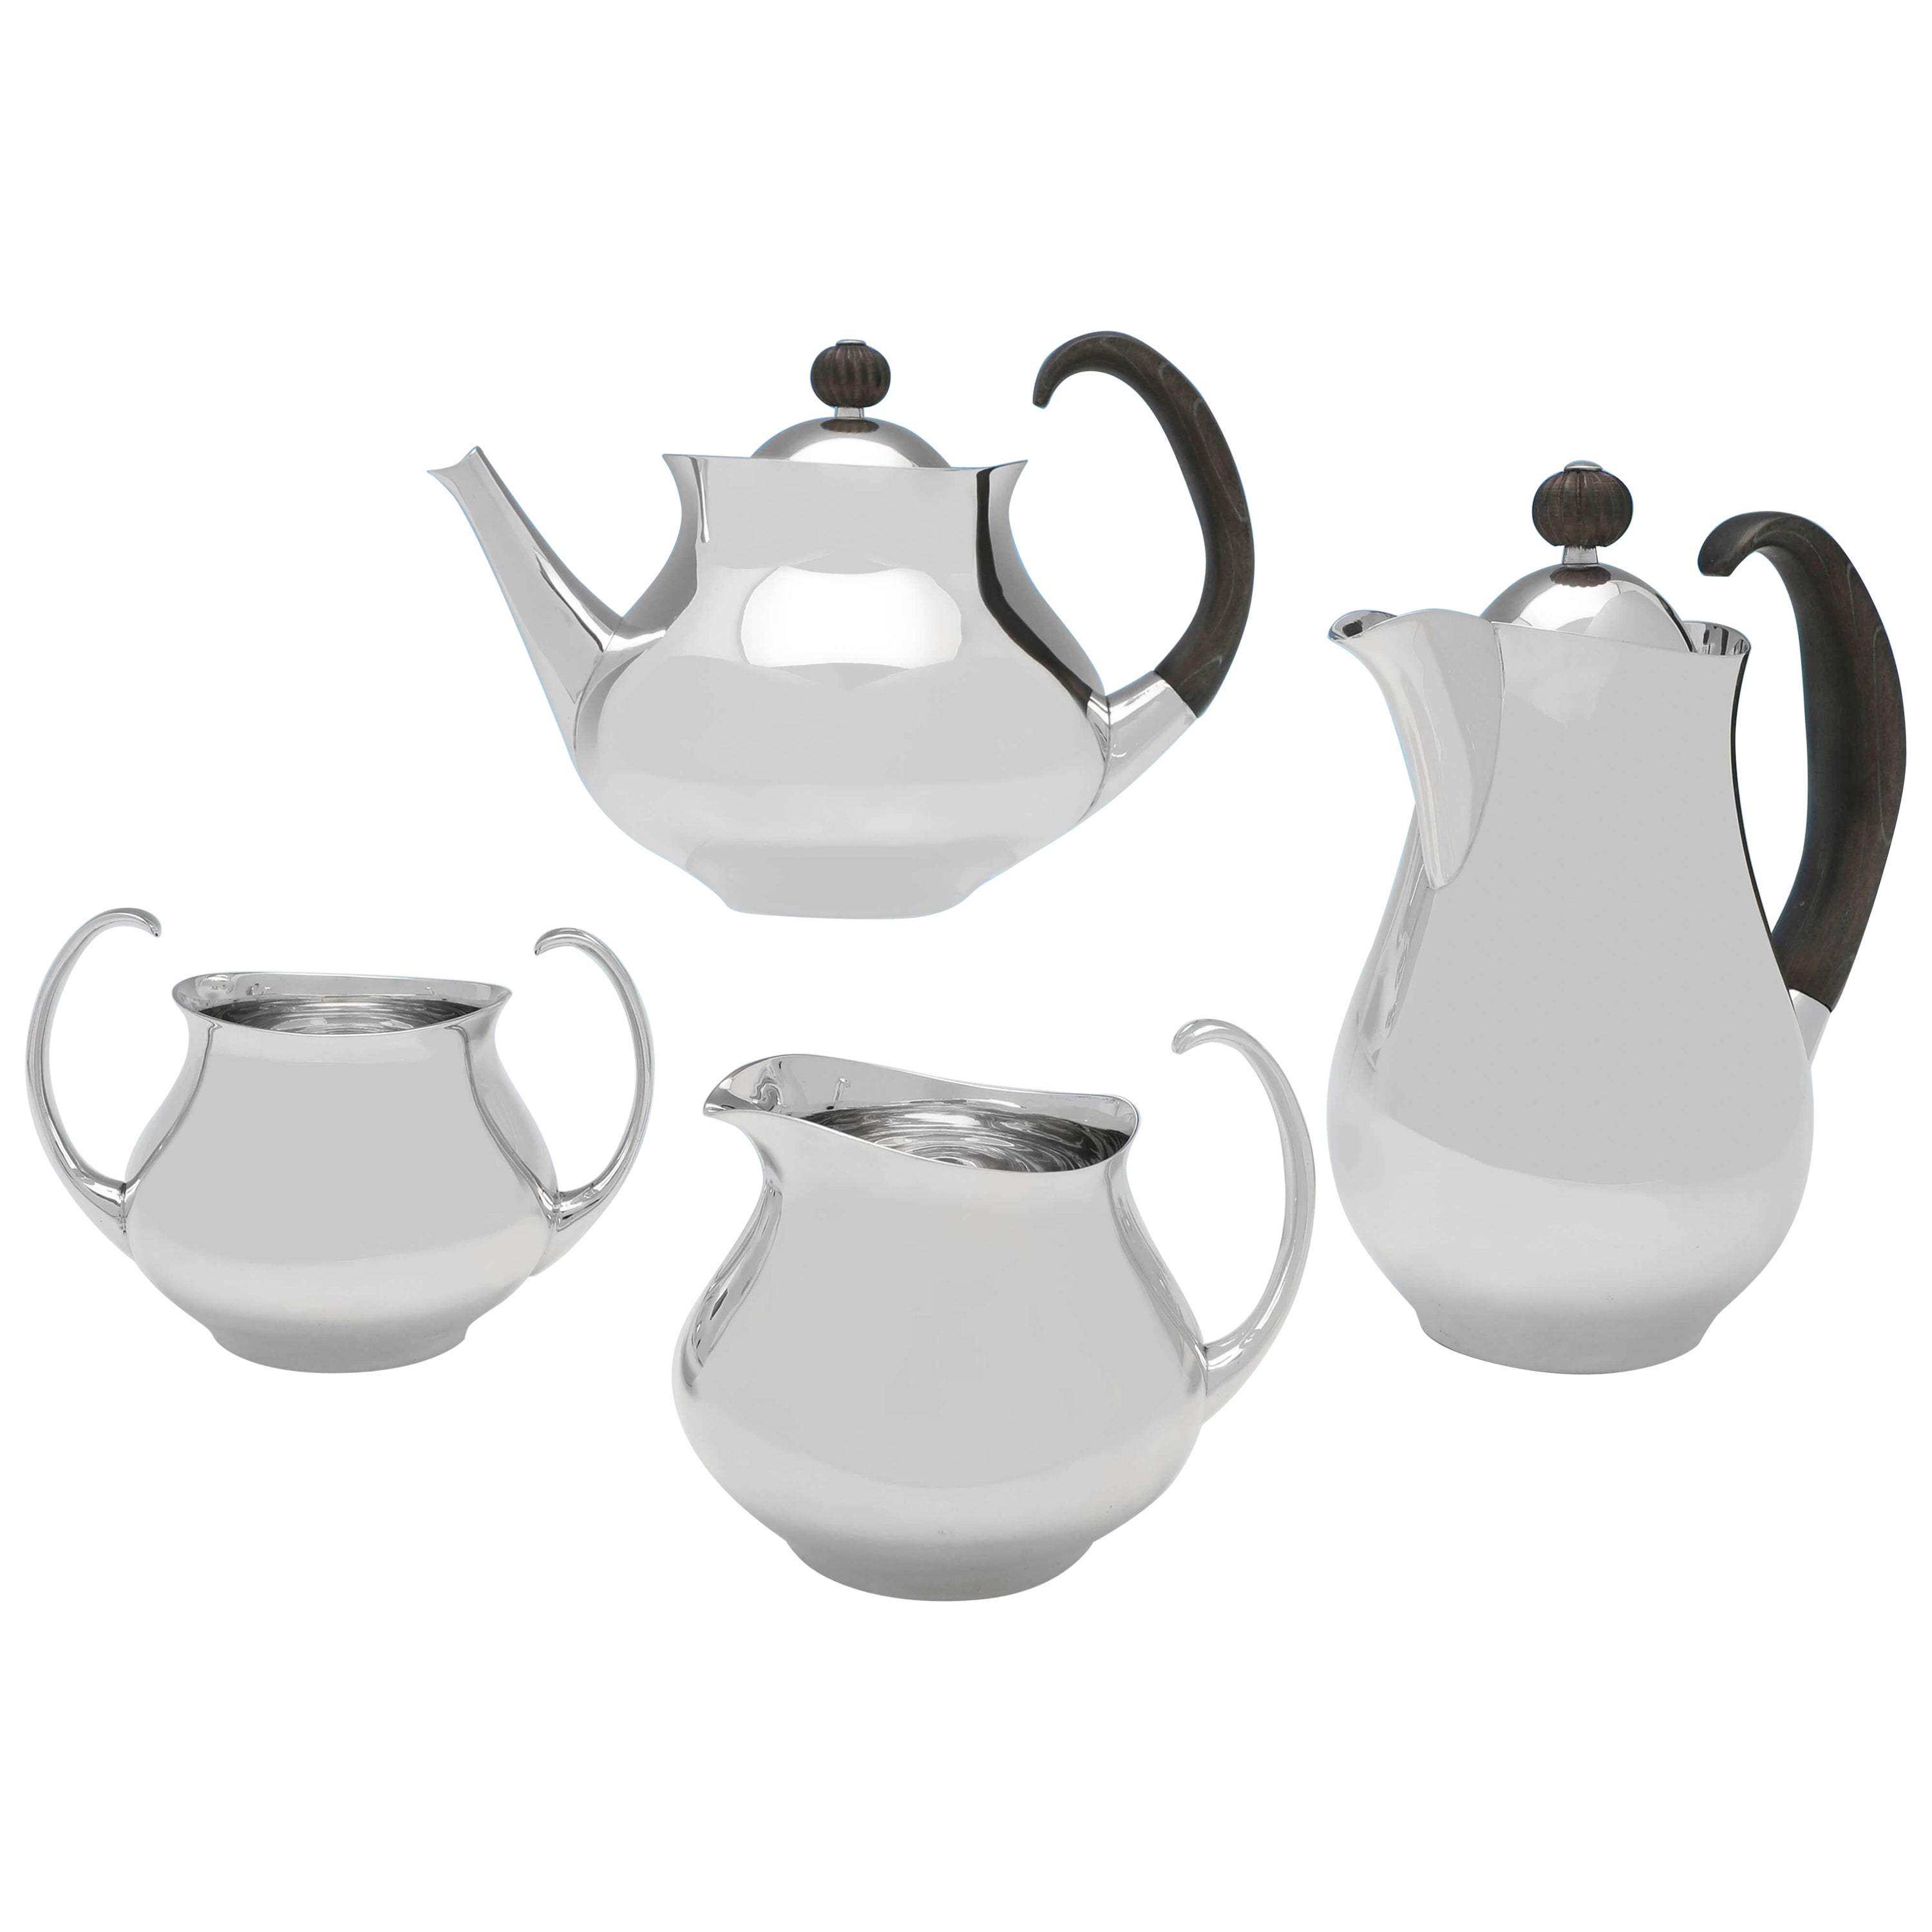 Clements Tea Service, Sterling Silver, 1964, Scandinavian Modern Design For Sale